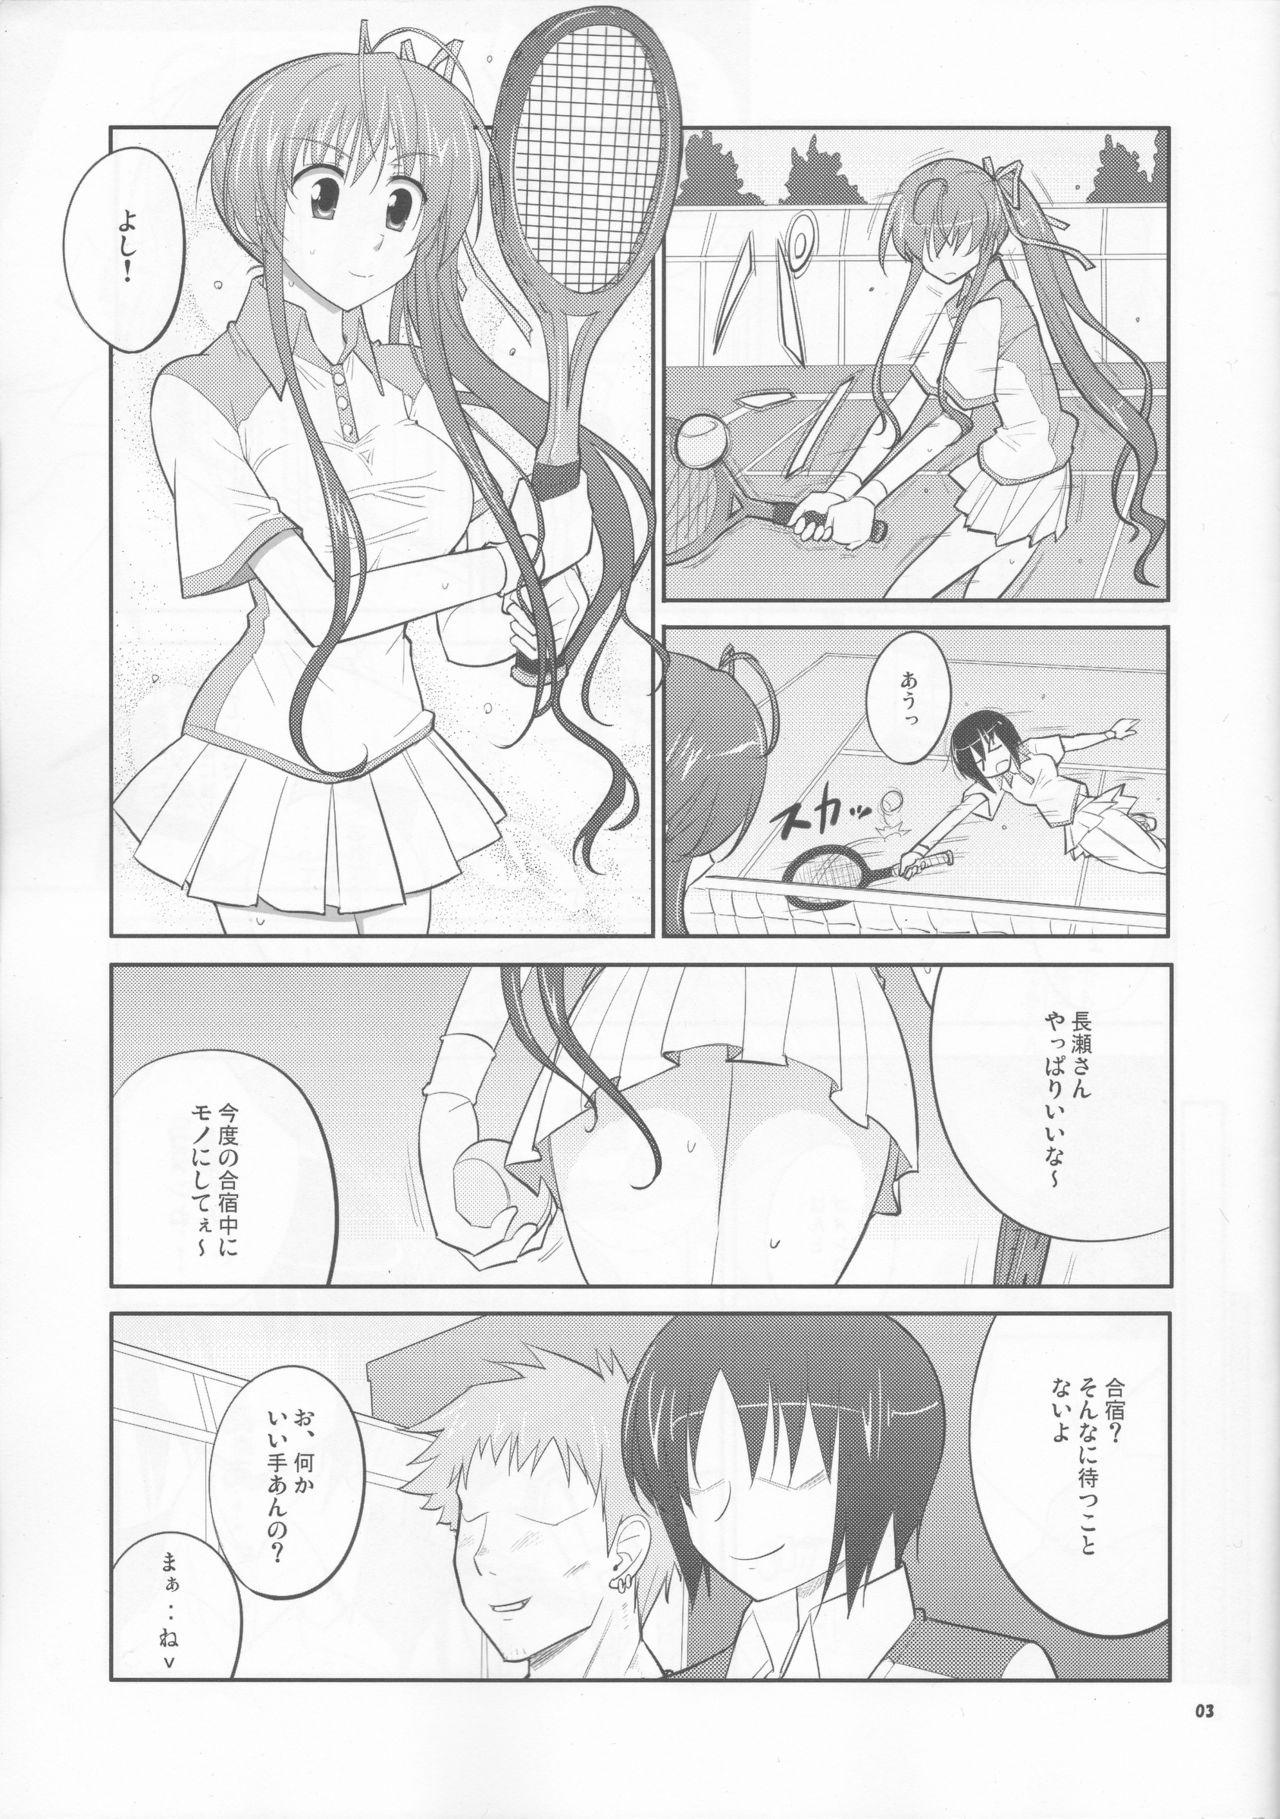 Com She turned black and... - Akaneiro ni somaru saka Piercing - Page 3